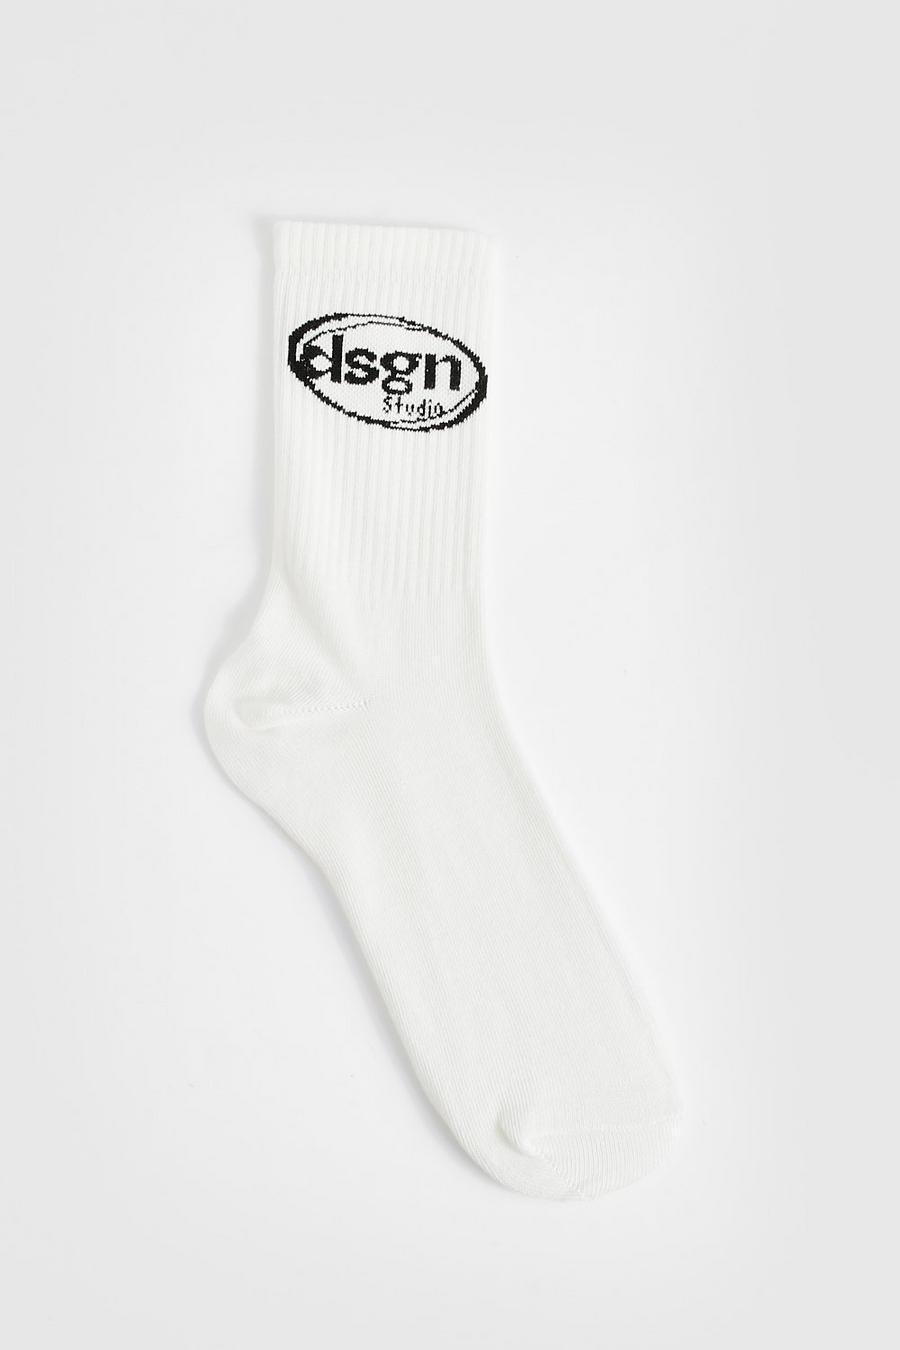 Single Dsgn Studio Slogan Sports Sock